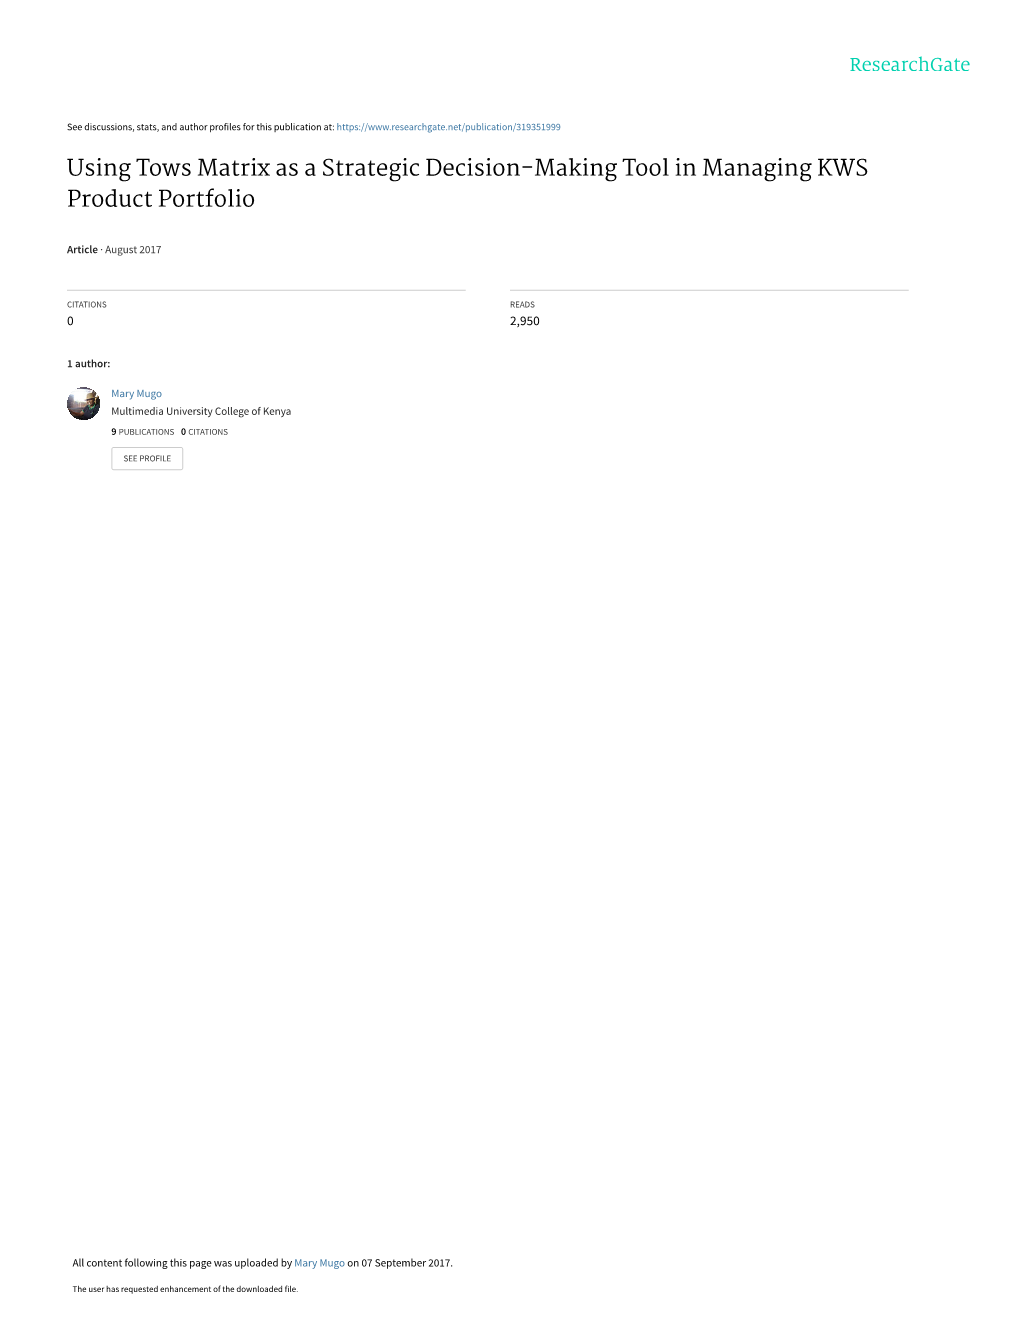 Using Tows Matrix As a Strategic Decision-Making Tool in Managing KWS Product Portfolio